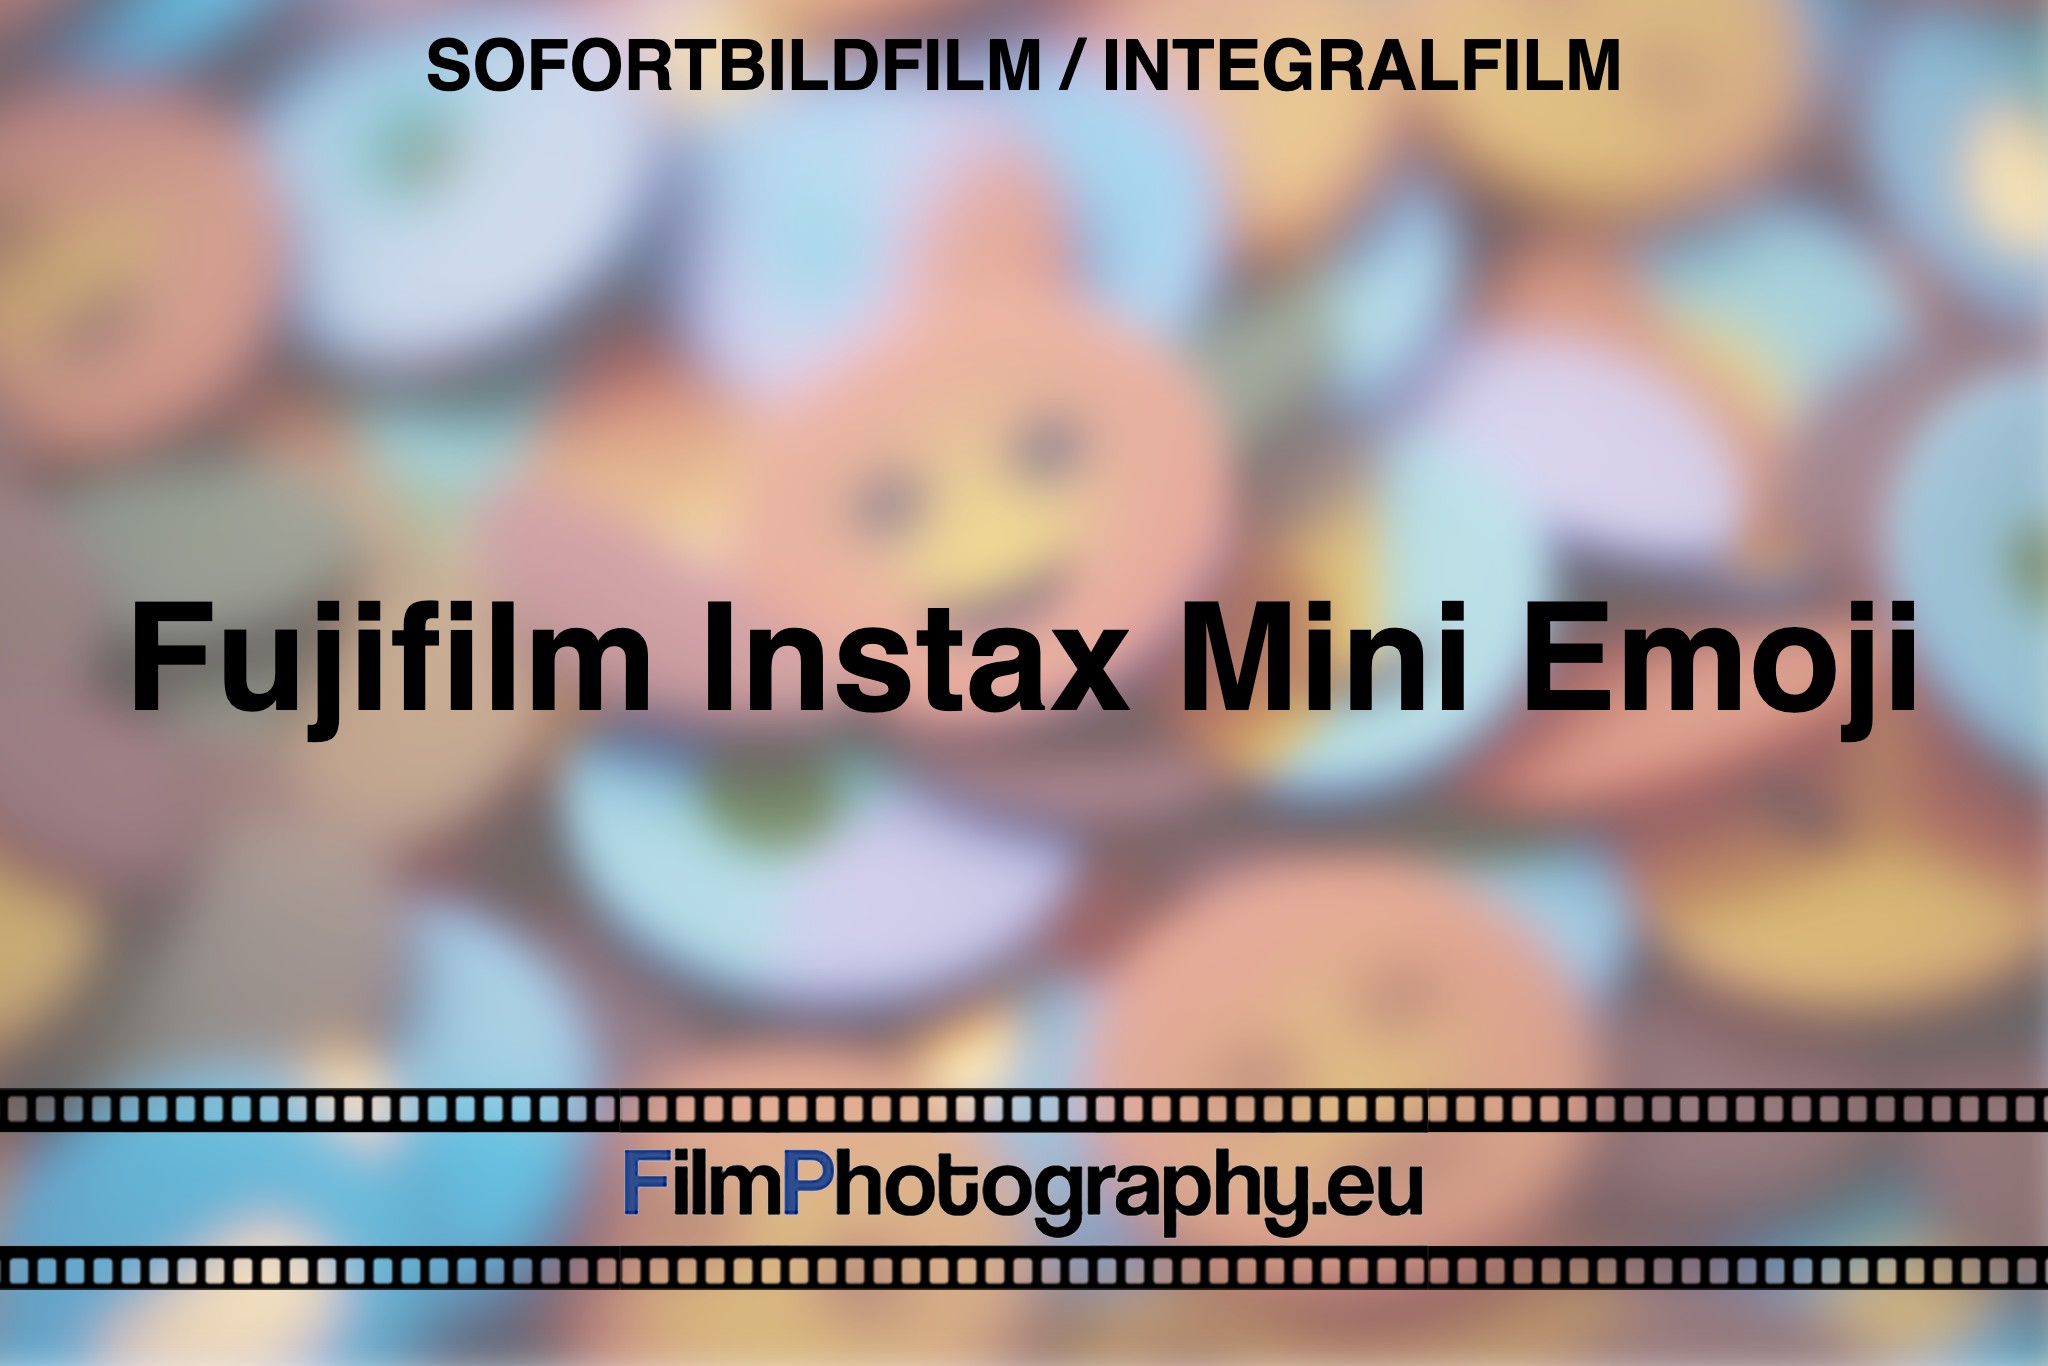 fujifilm-instax-mini-emoji-sofortbildfilm-integralfilm-fp-bnv